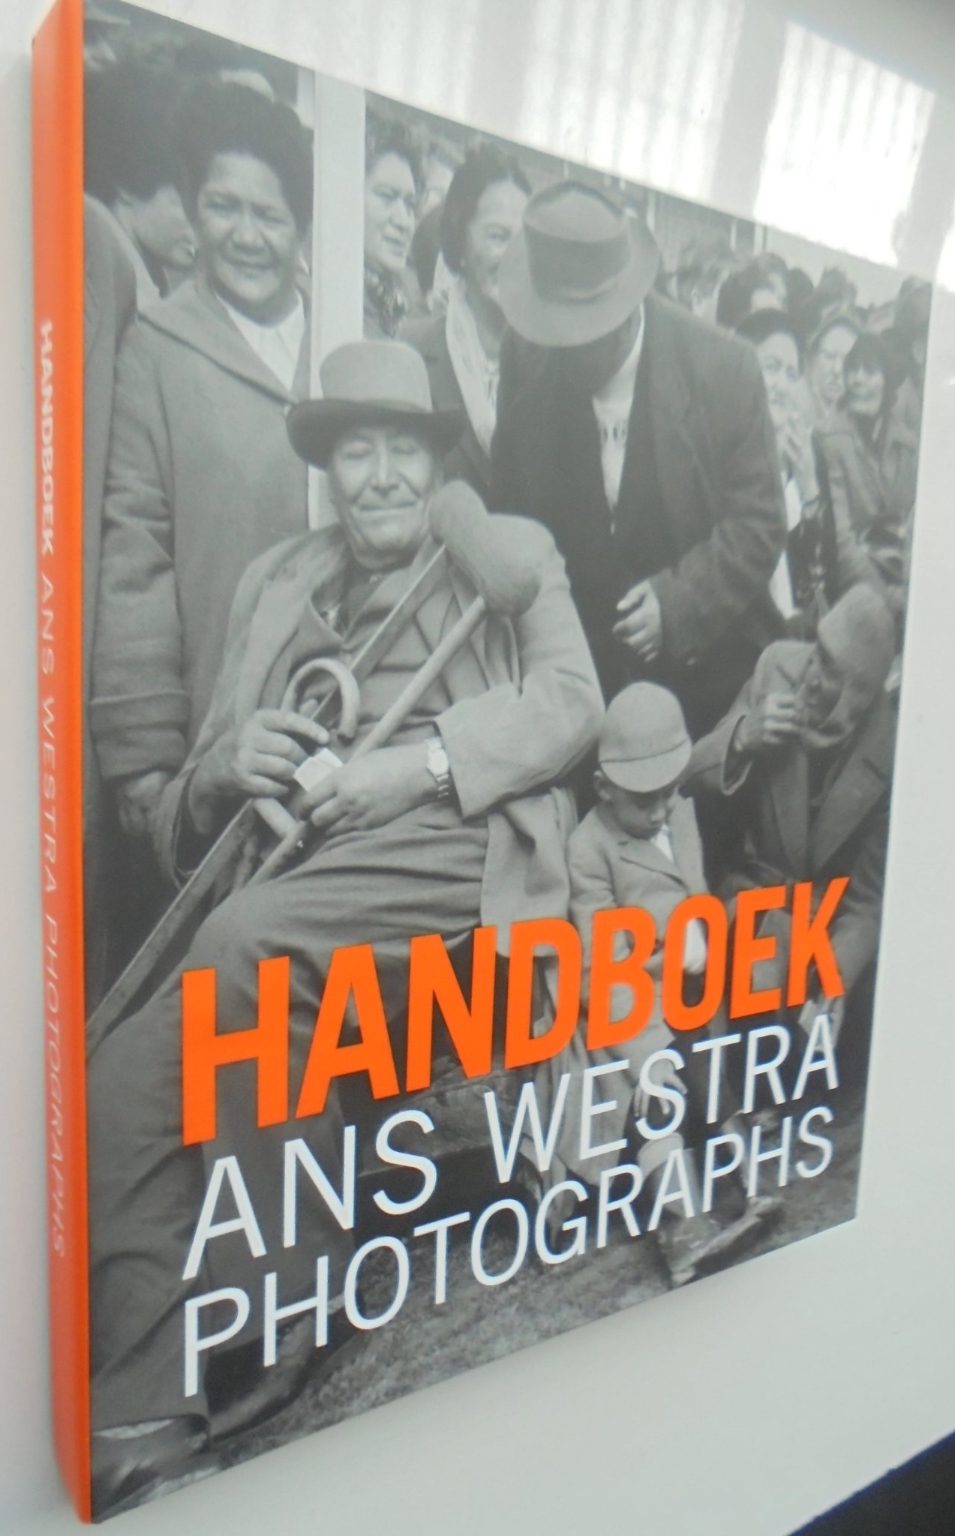 Handboek. Ans Westra Photographs